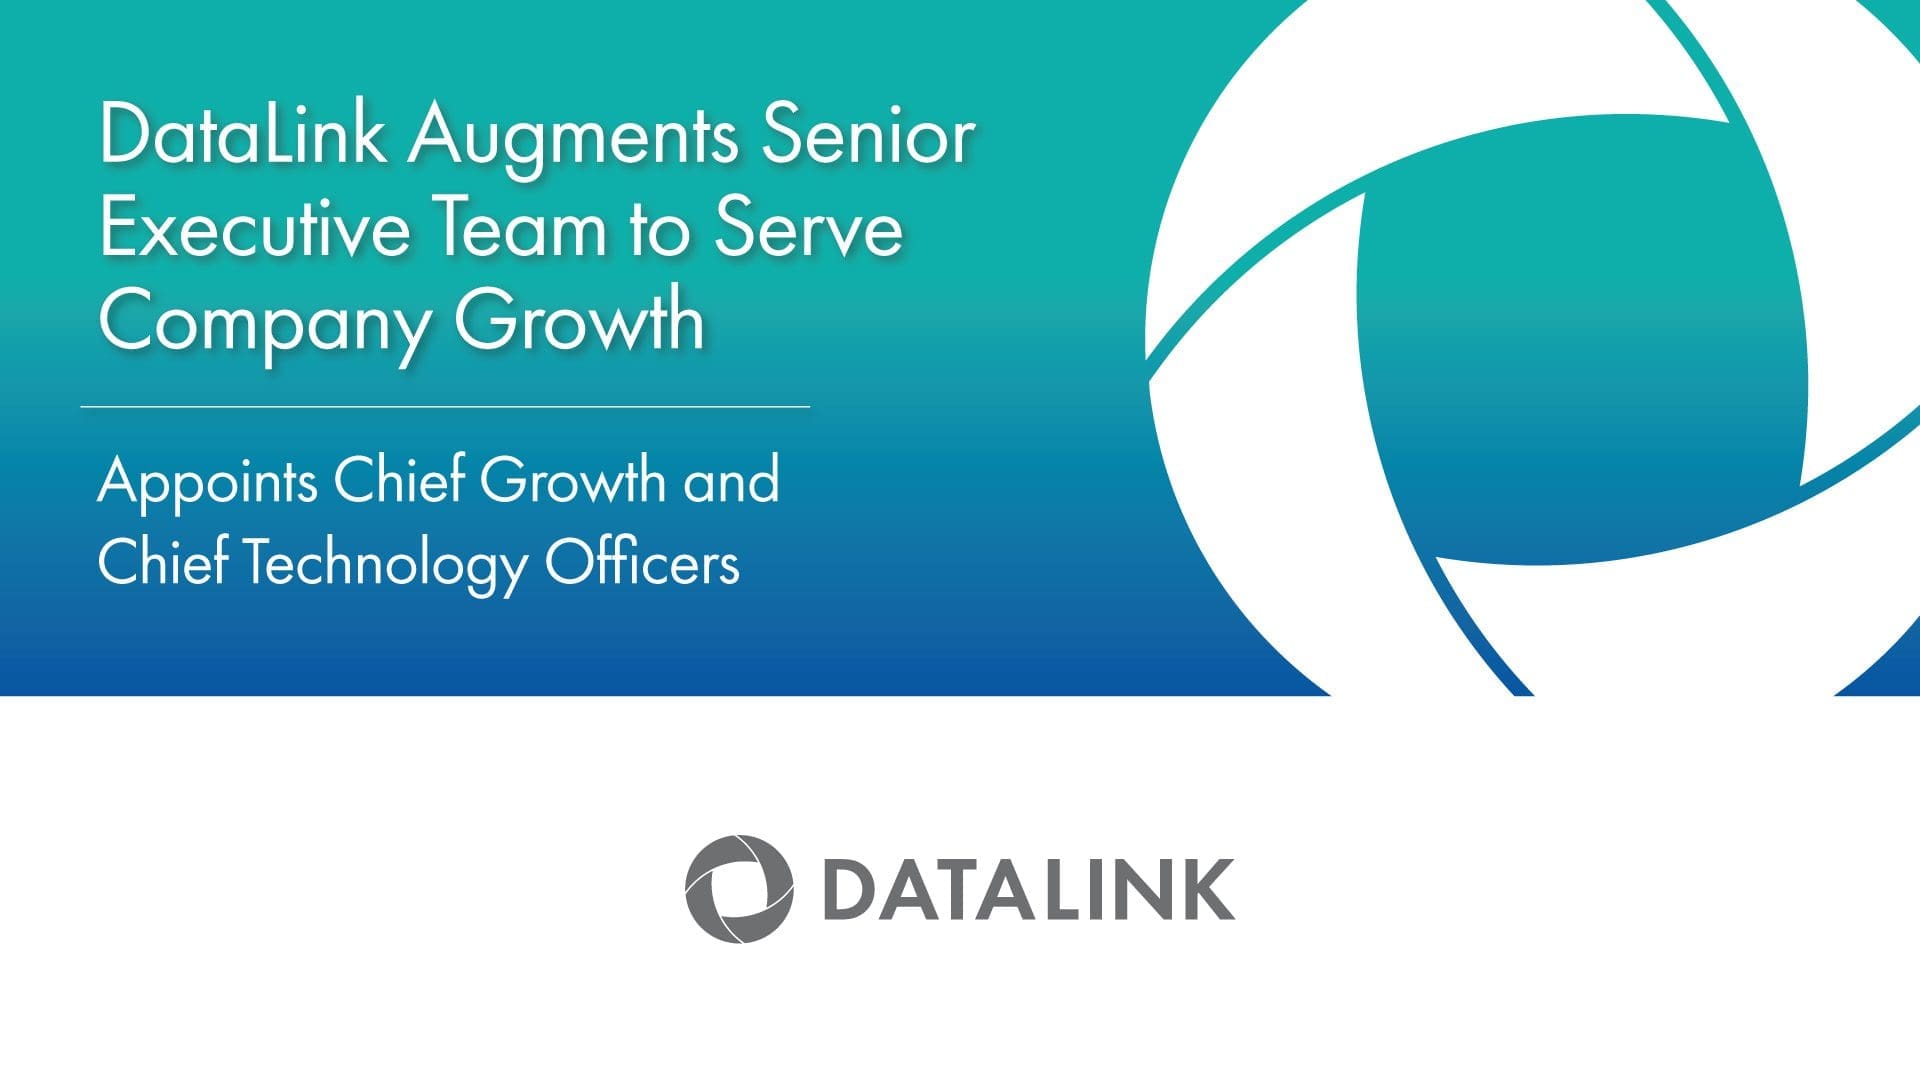 DataLink augments senior executive team to serve company growth